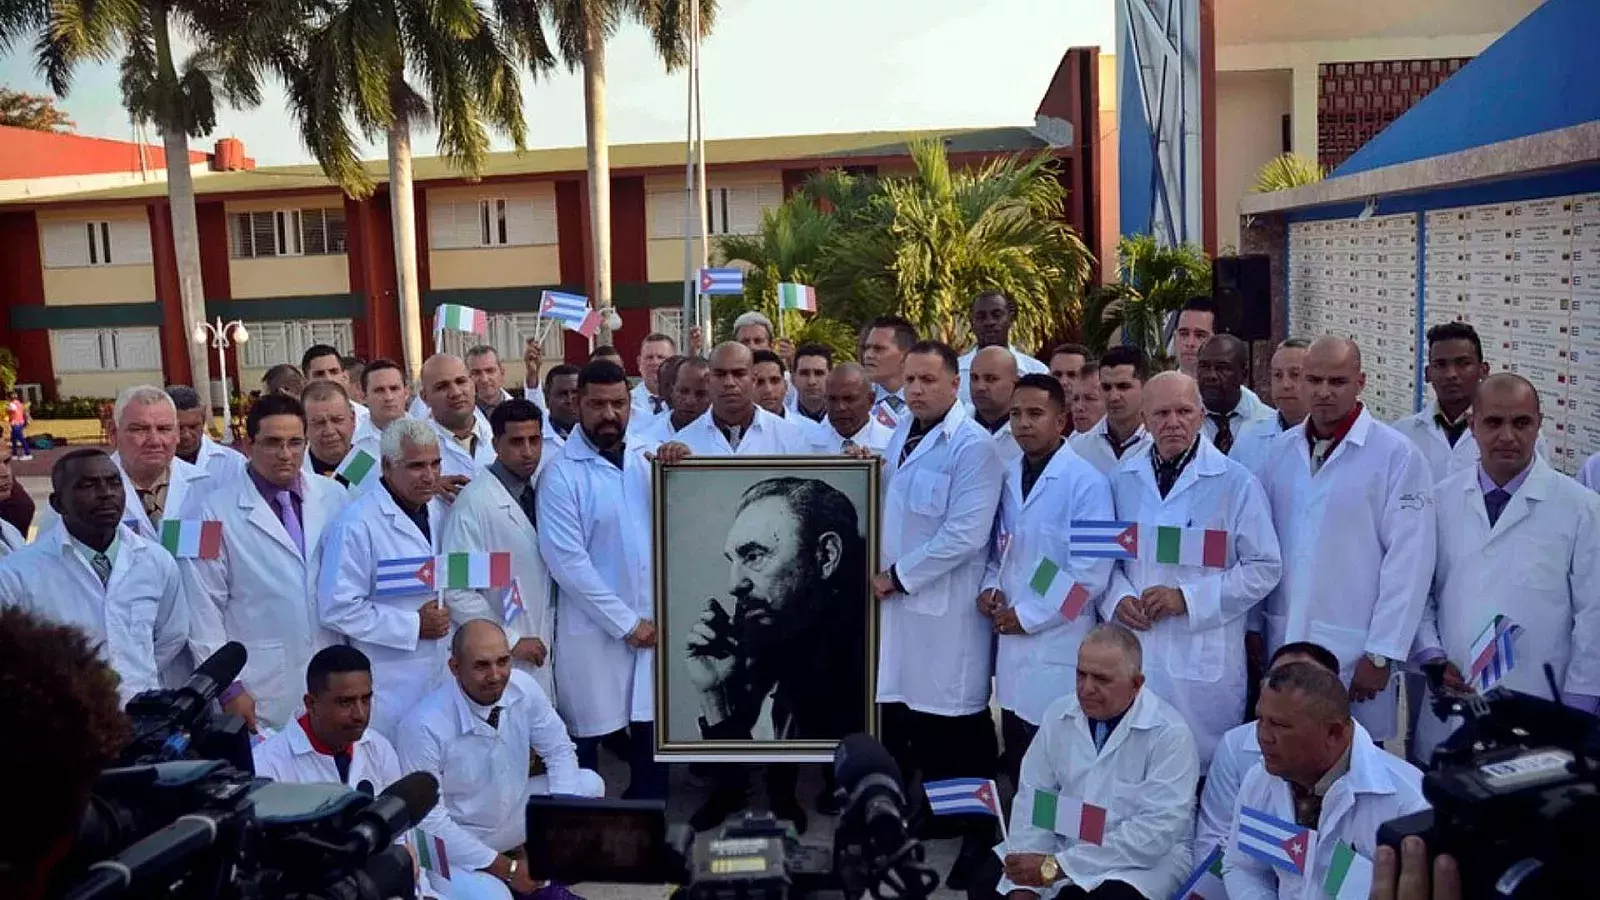 Misiones médicas cubanas, esclavitud moderna